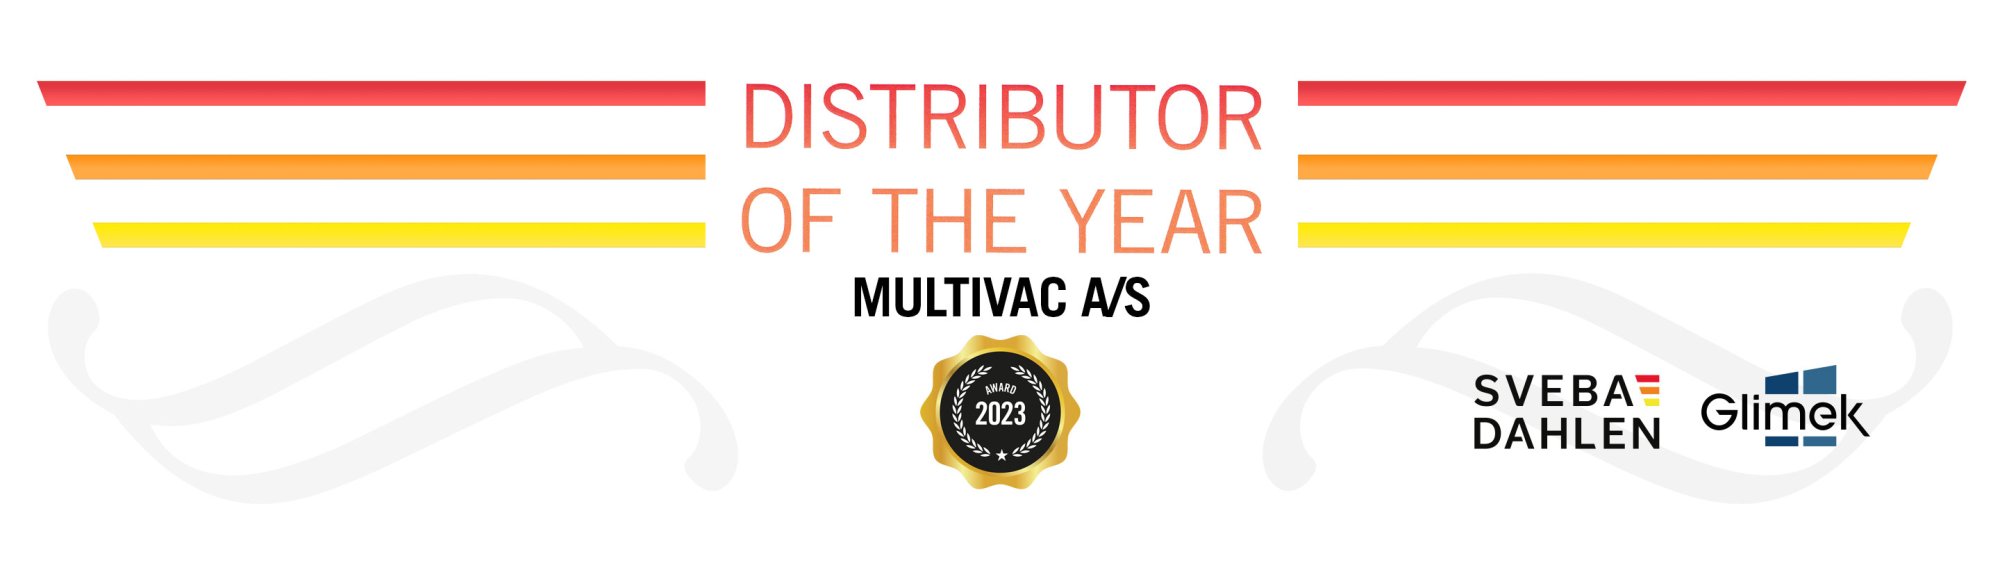 Distributor of the year 2023 Multivac A/S Denmark Sveba Dahlen